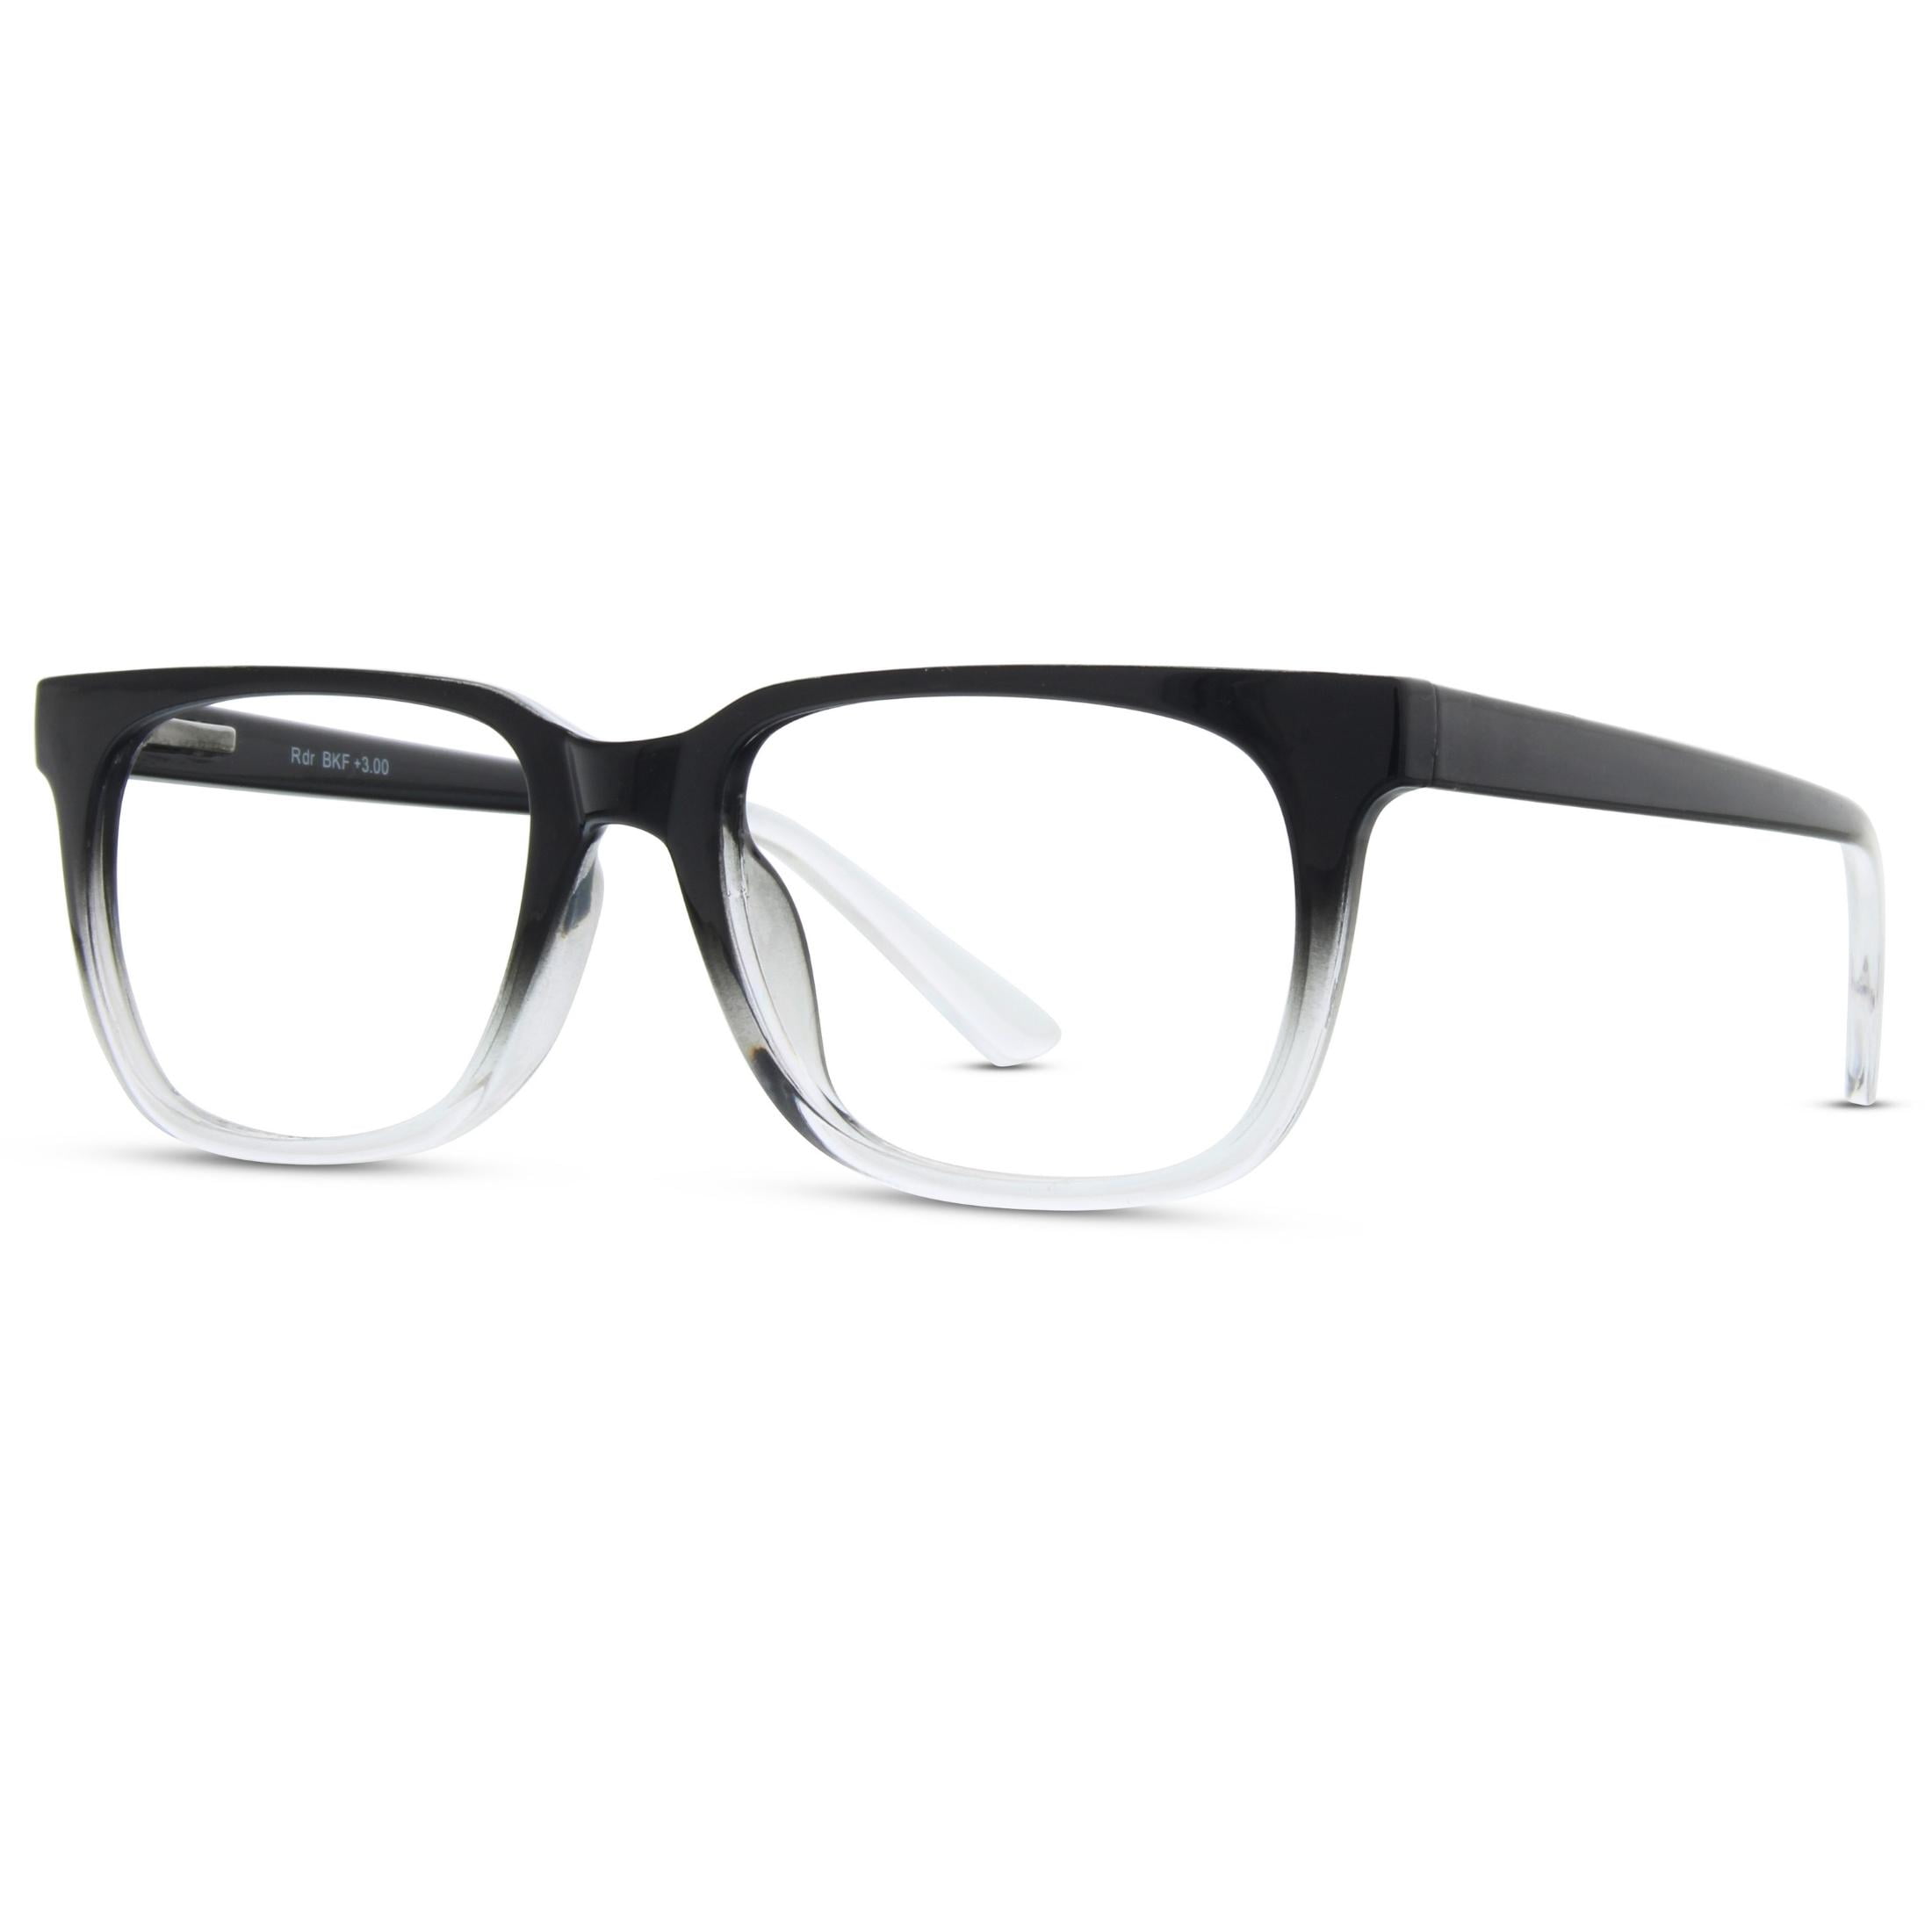 Jonas Paul Eyewear Blue Light Glasses, Black / Crystal Fade, Magnifying Acrylic Lens, Unisex, 2.50